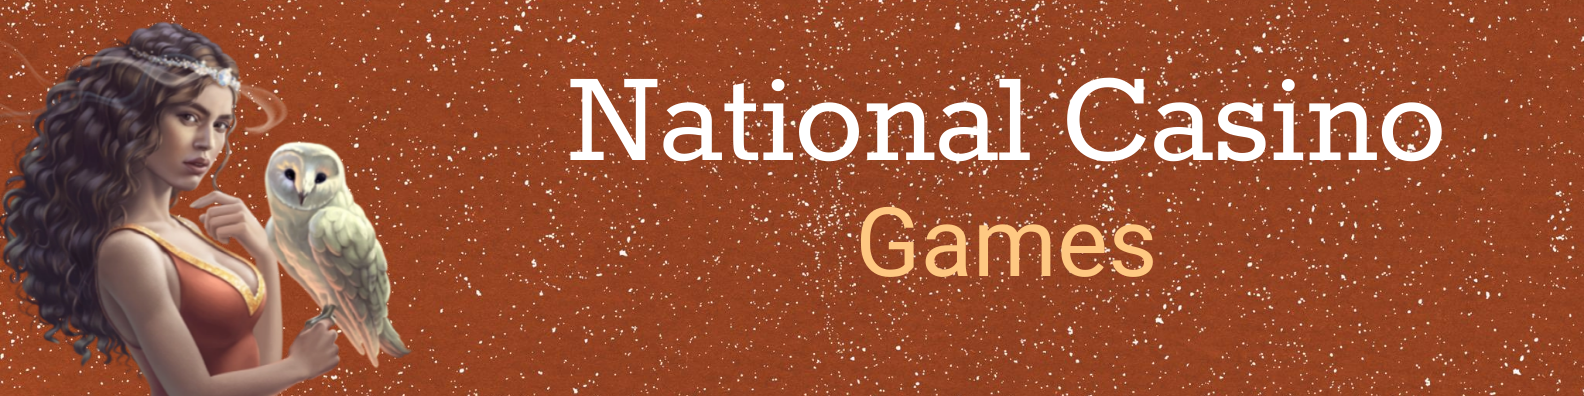 National Casino Games